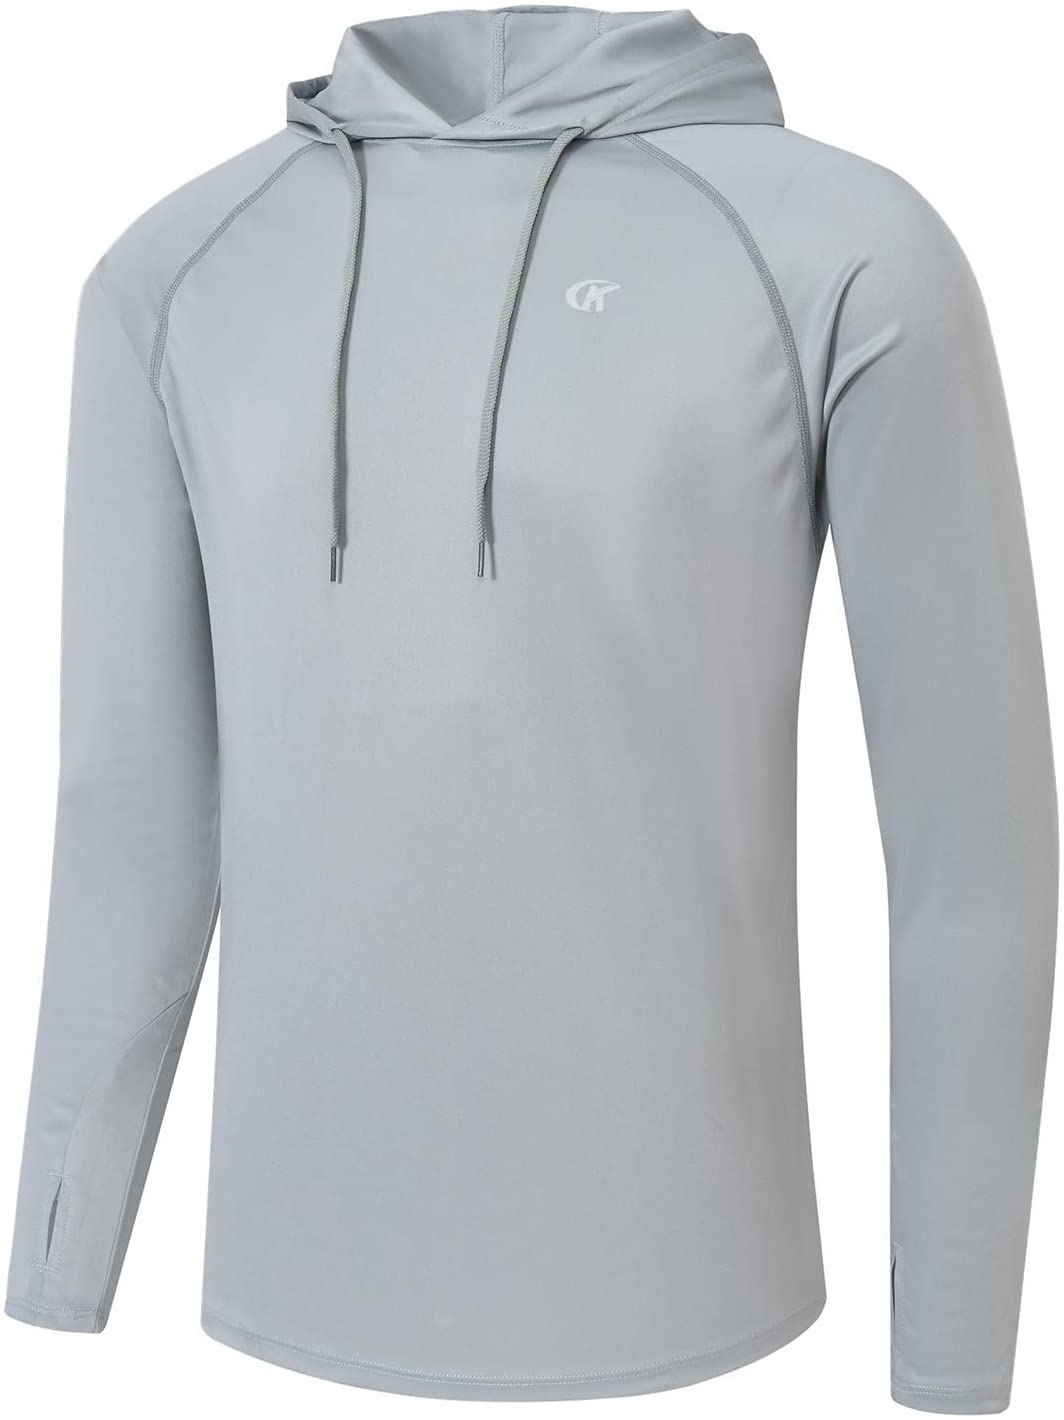 Satankud Men's UPF 50 Athletic Hoodies Long Sleeve Fishing Hiking Workout Shirts